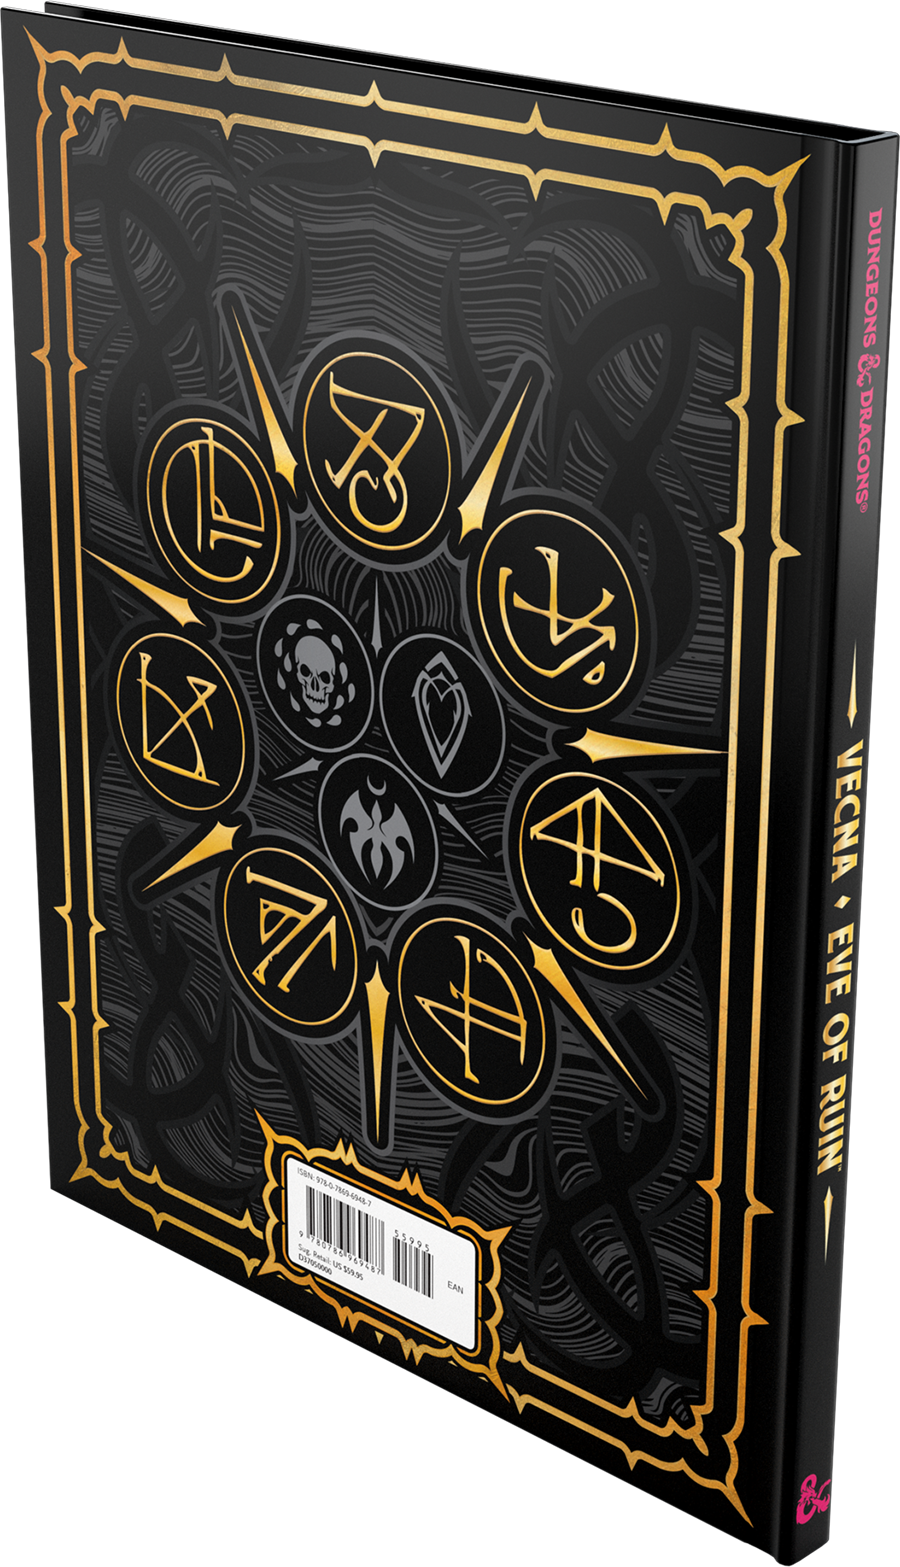 Dungeons & Dragons Vecna: Eye of Ruin Alternate Cover